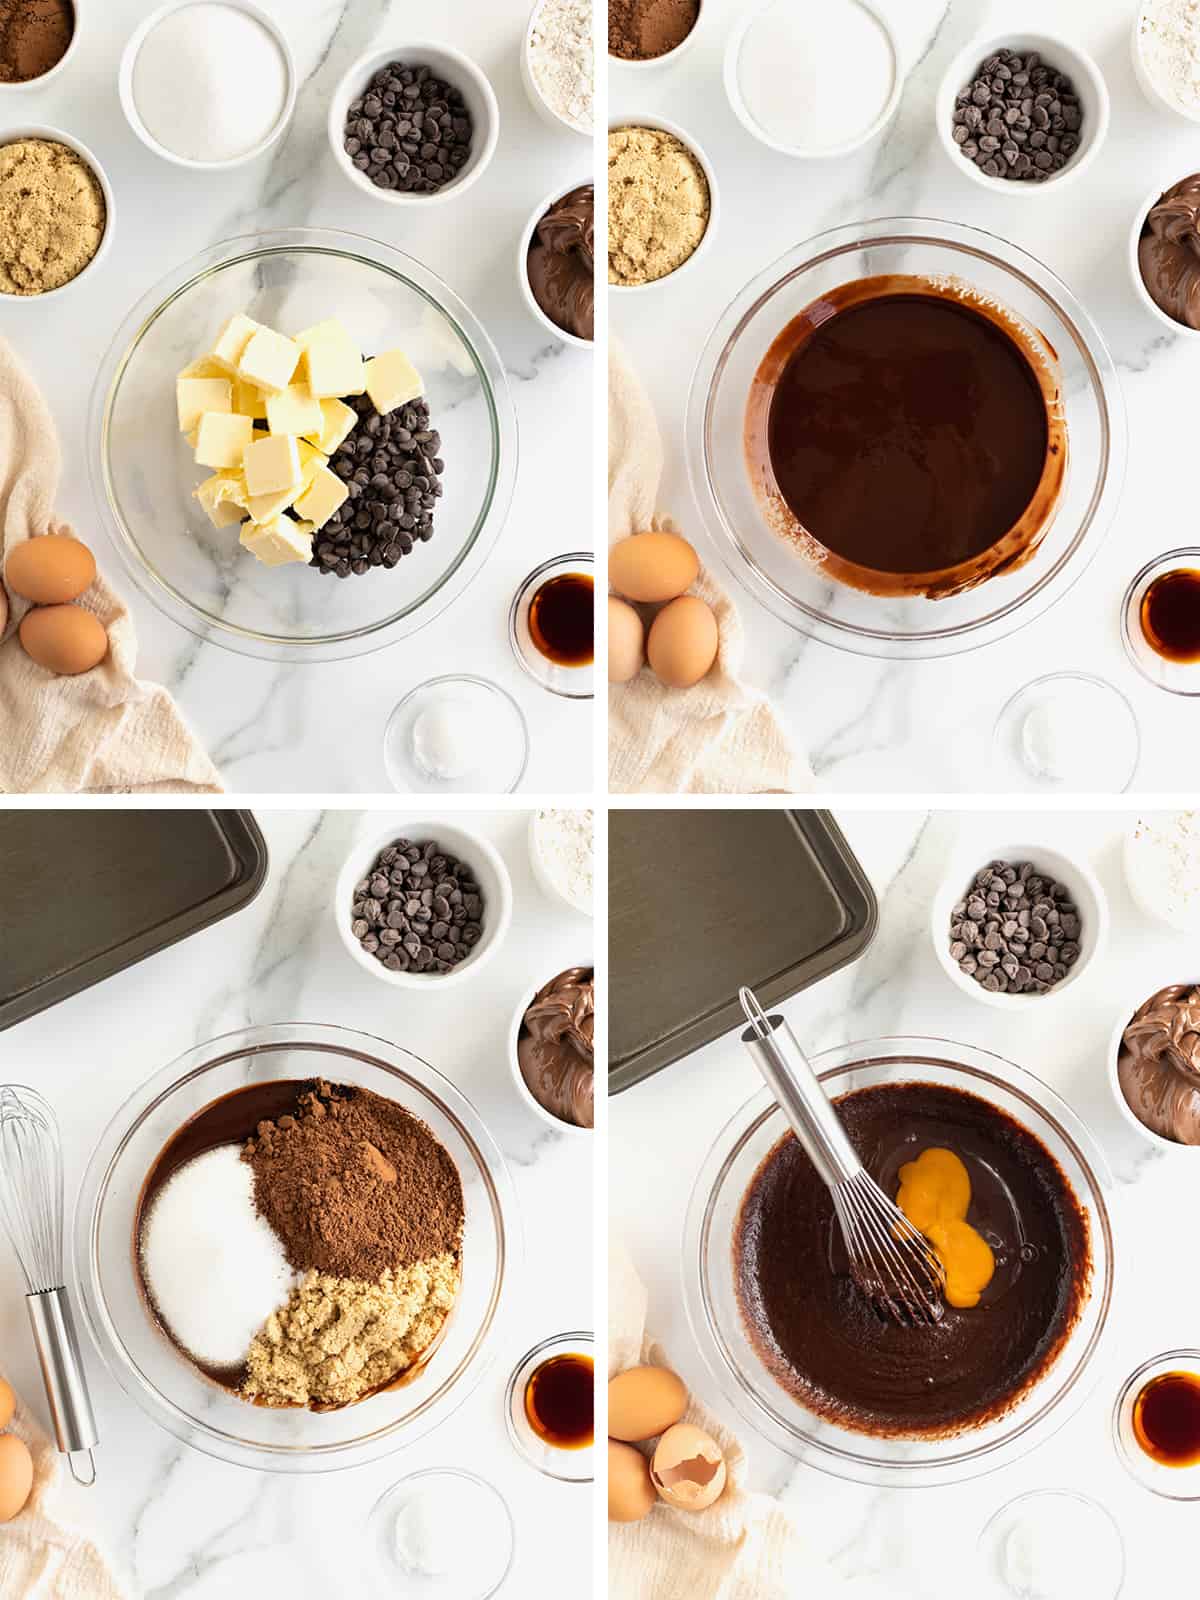 Steps to make Nutella brownie batter.